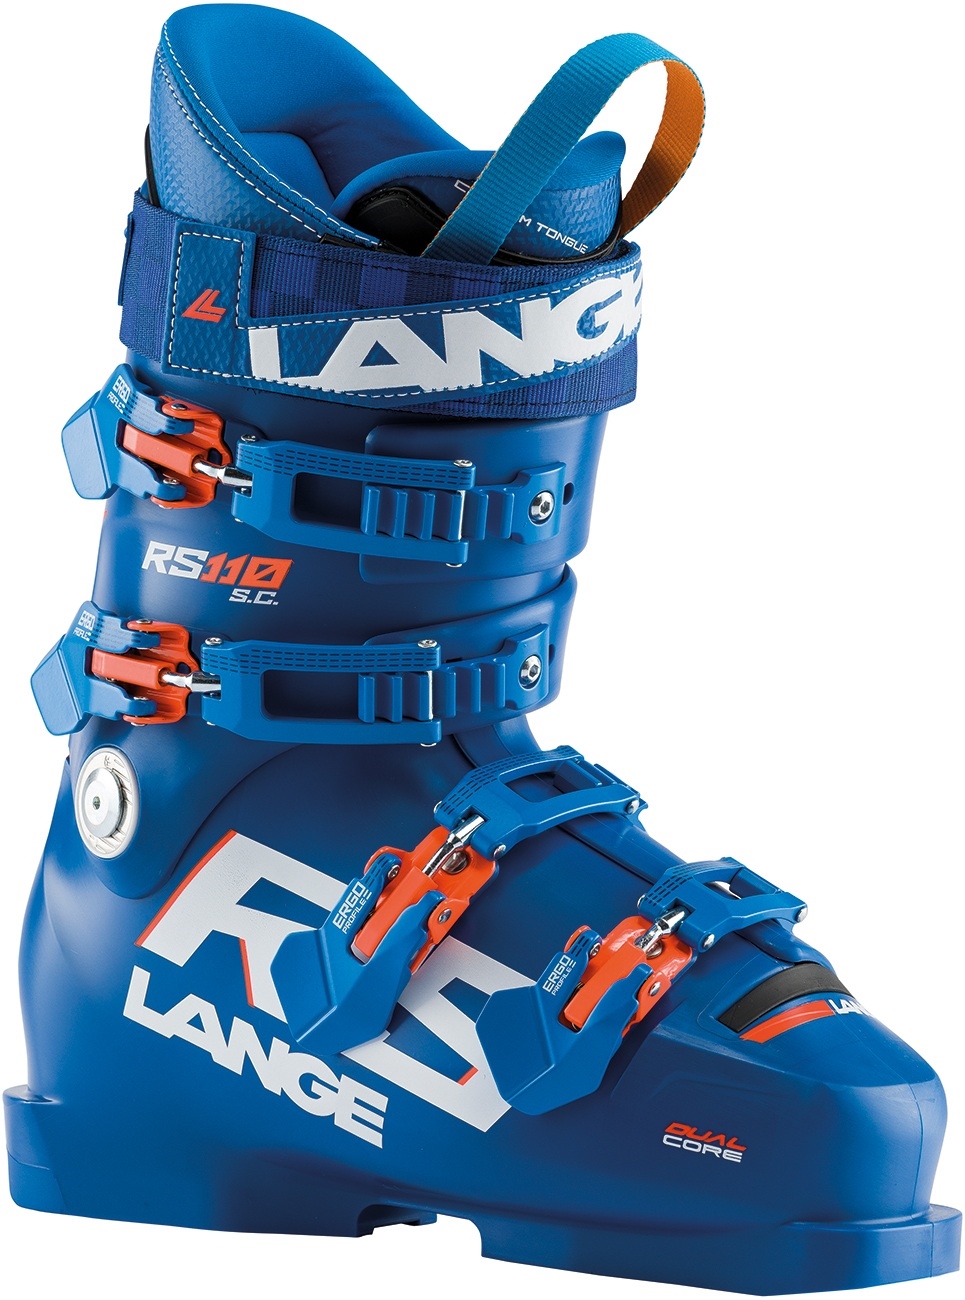 LANGE RS 110 S.C. Skischuhe blau